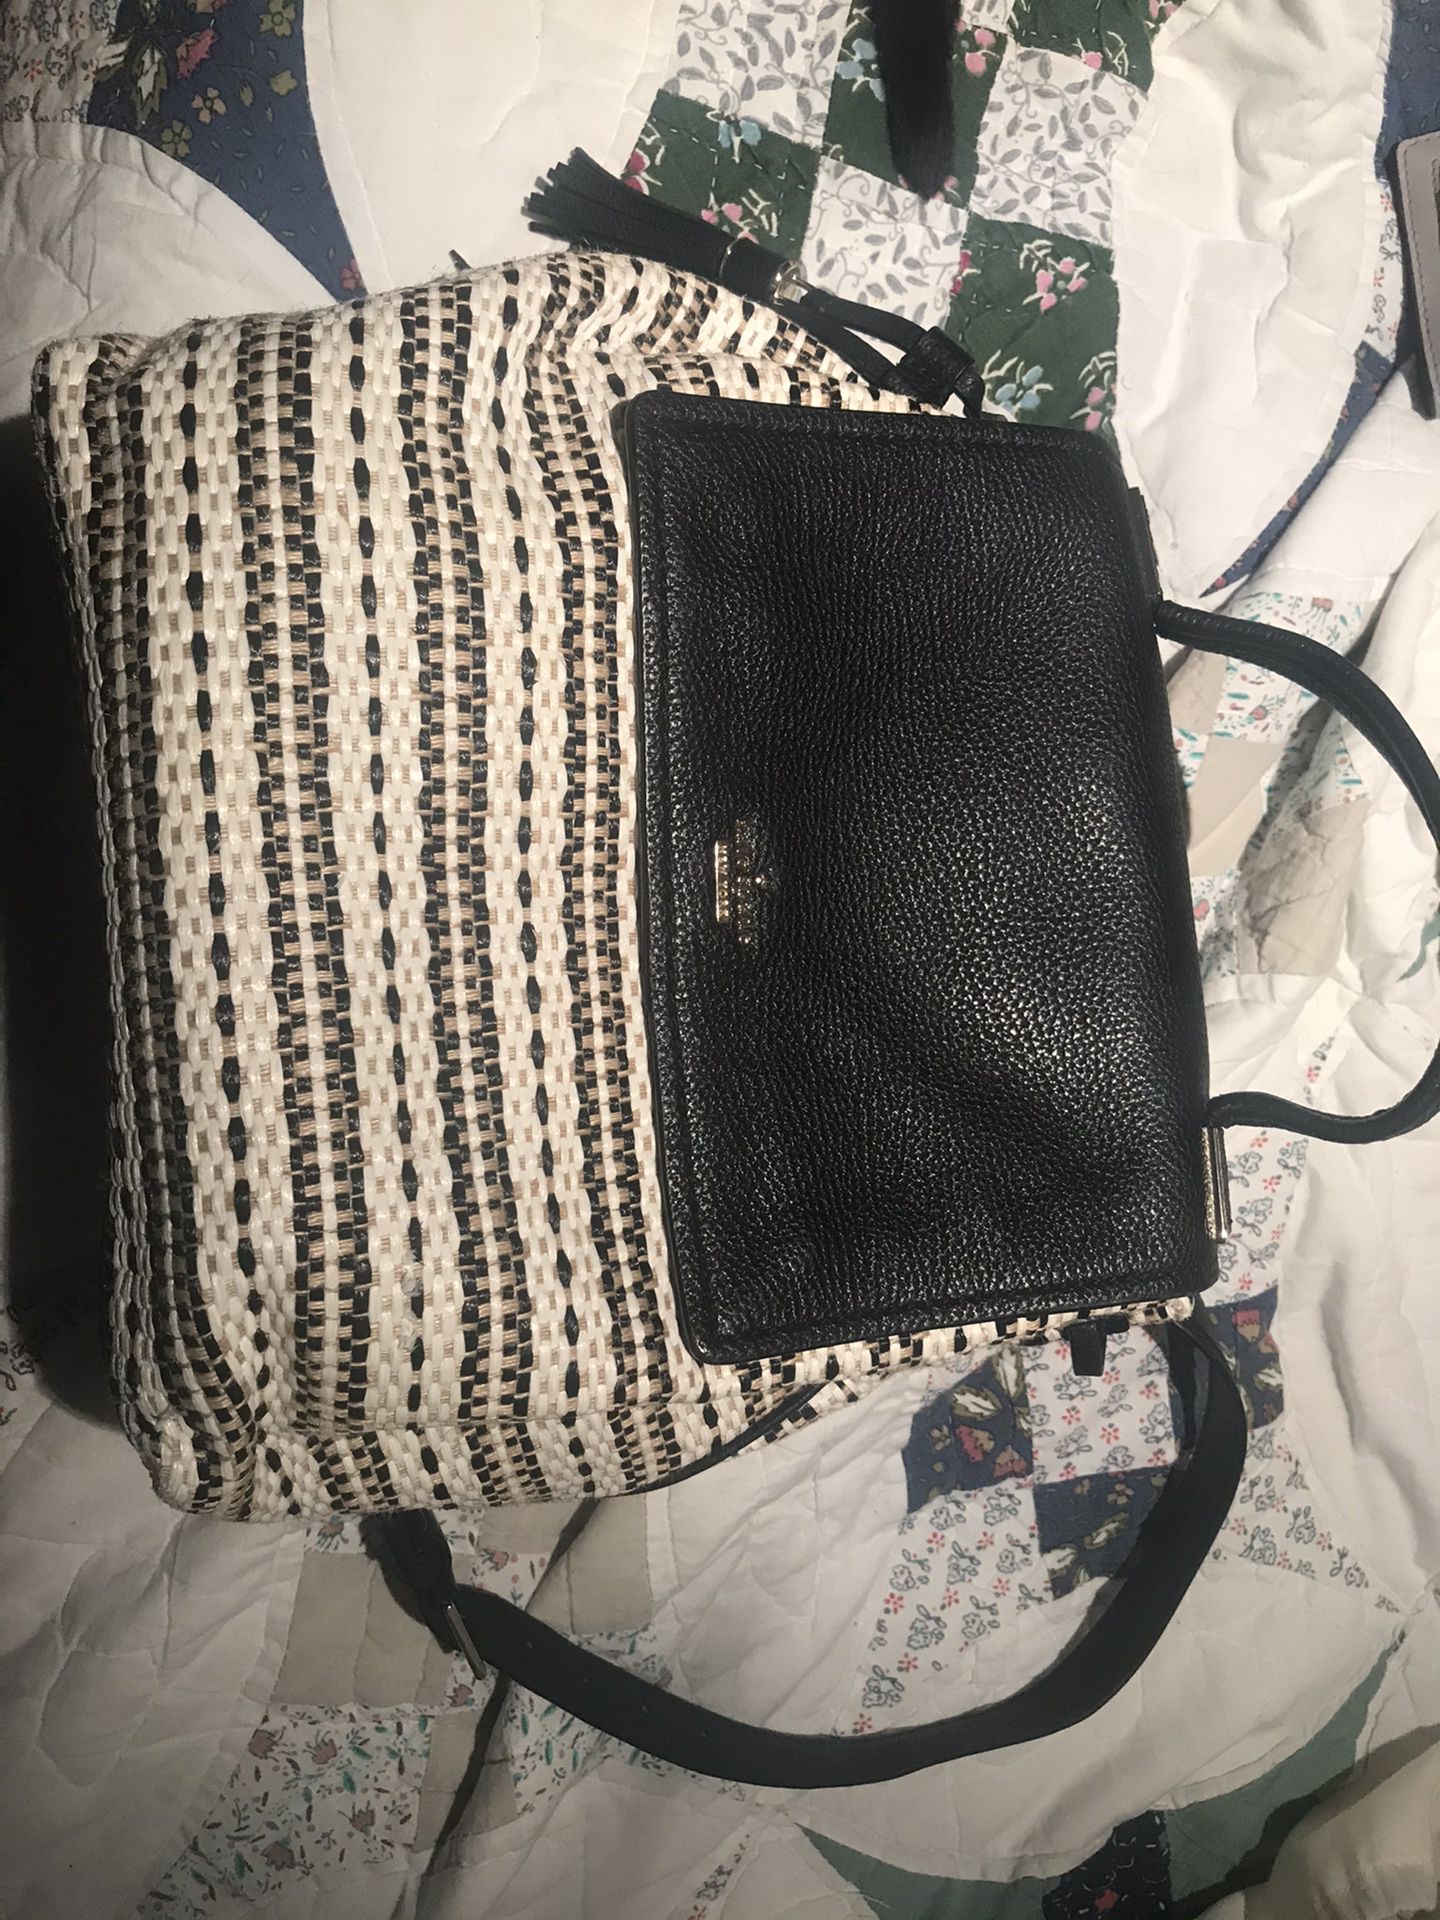 Kate Spade straw backpack purse